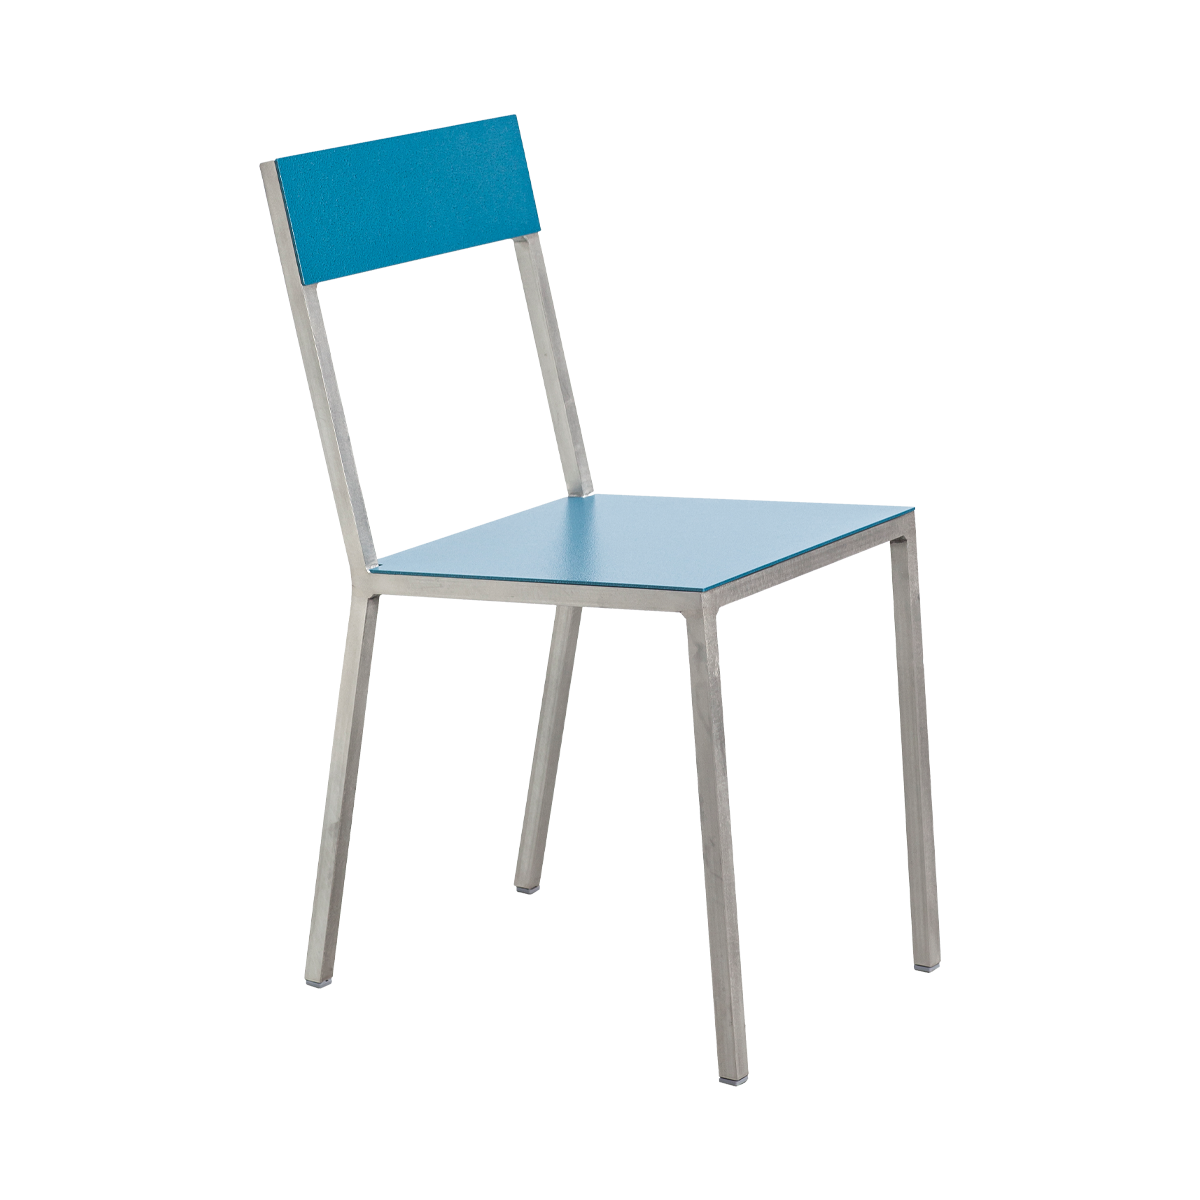 Alu Chair